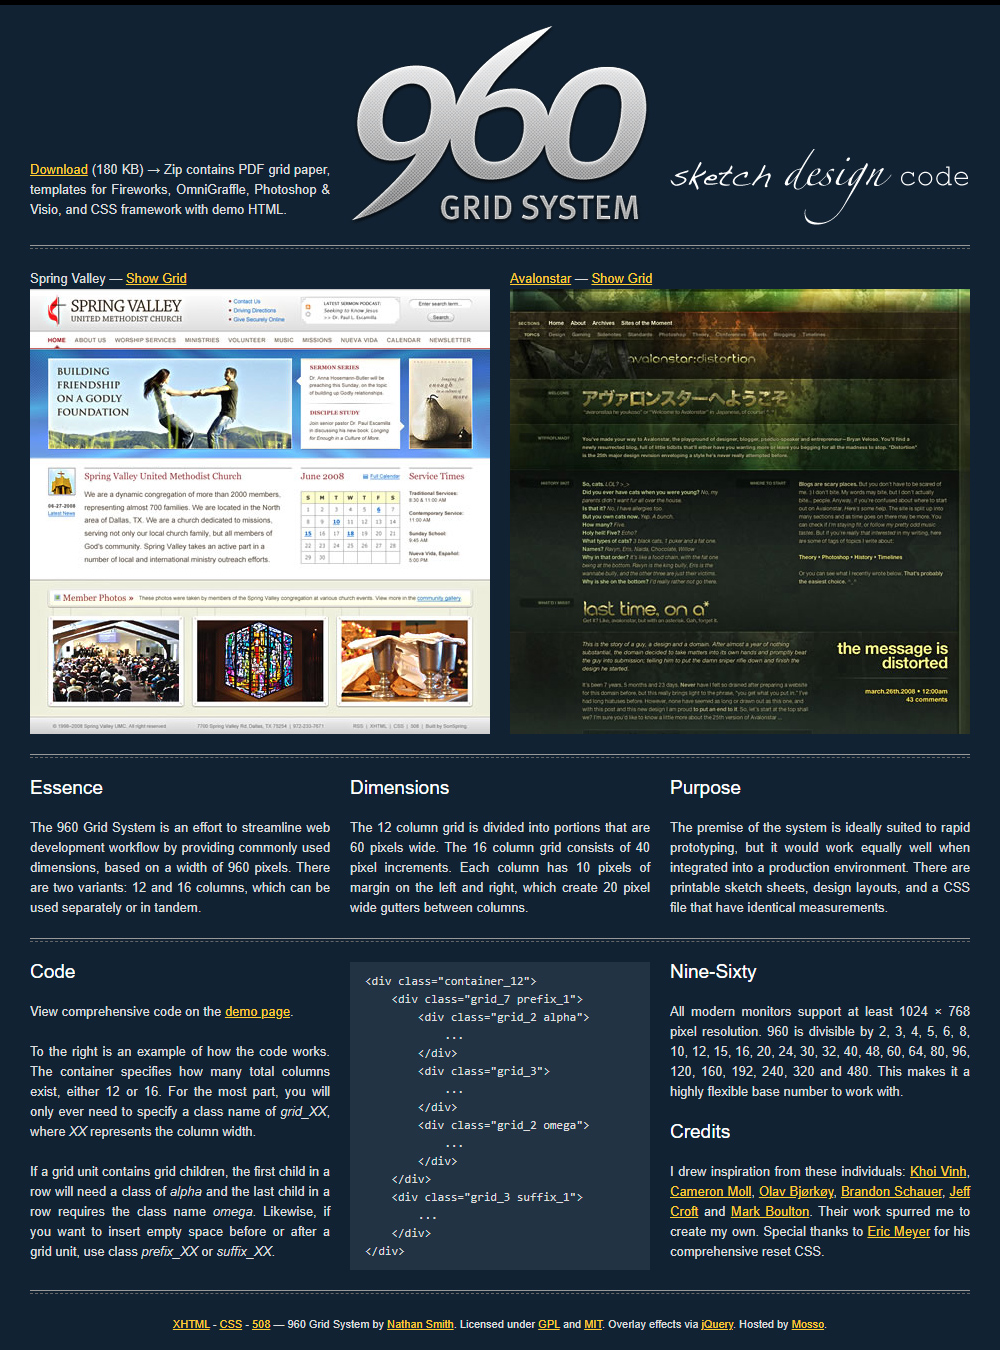 960 Grid System website in 2008